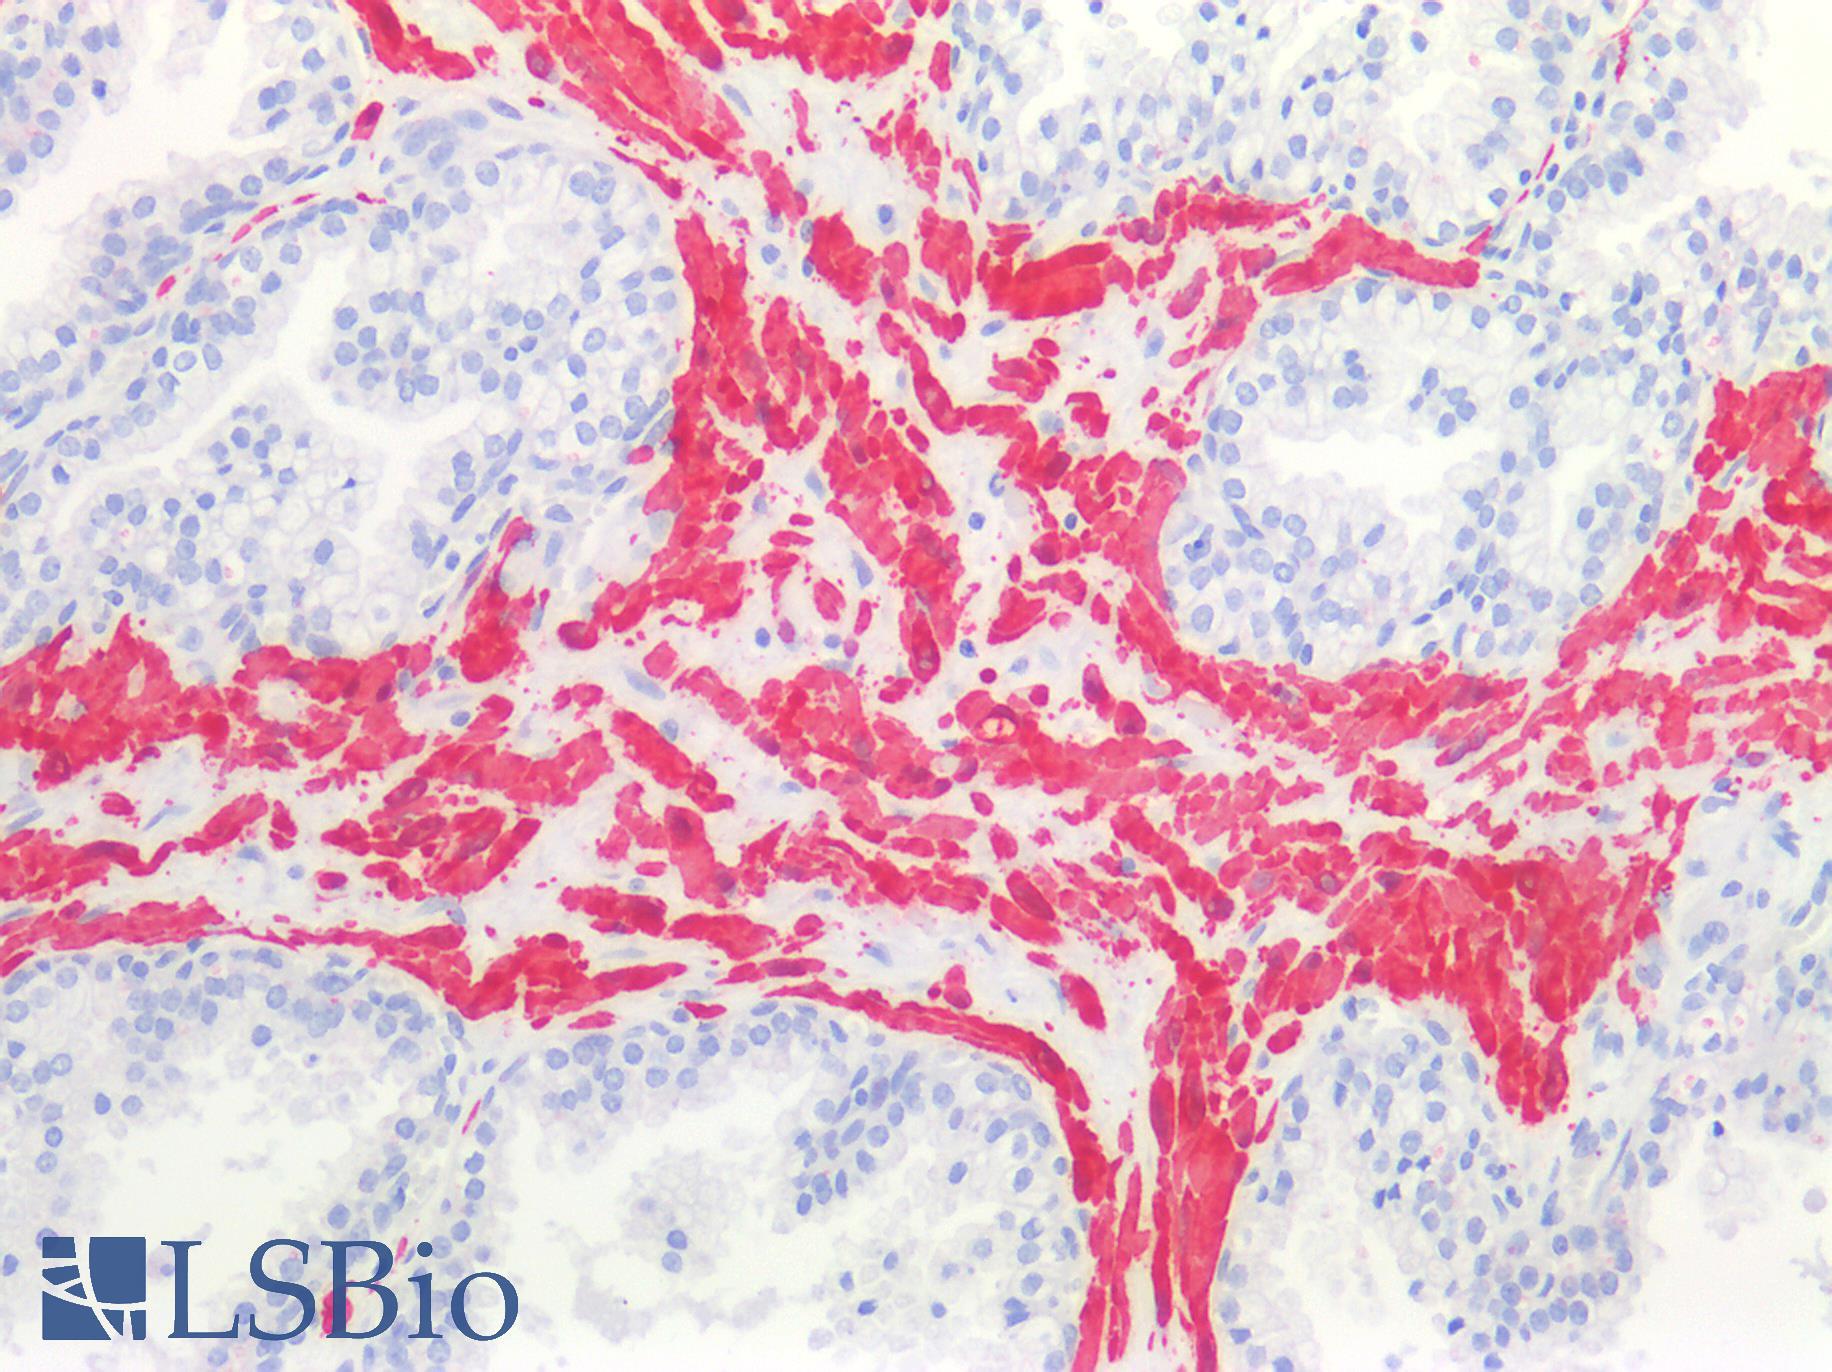 TAGLN / Transgelin / SM22 Antibody - Human Prostate: Formalin-Fixed, Paraffin-Embedded (FFPE)